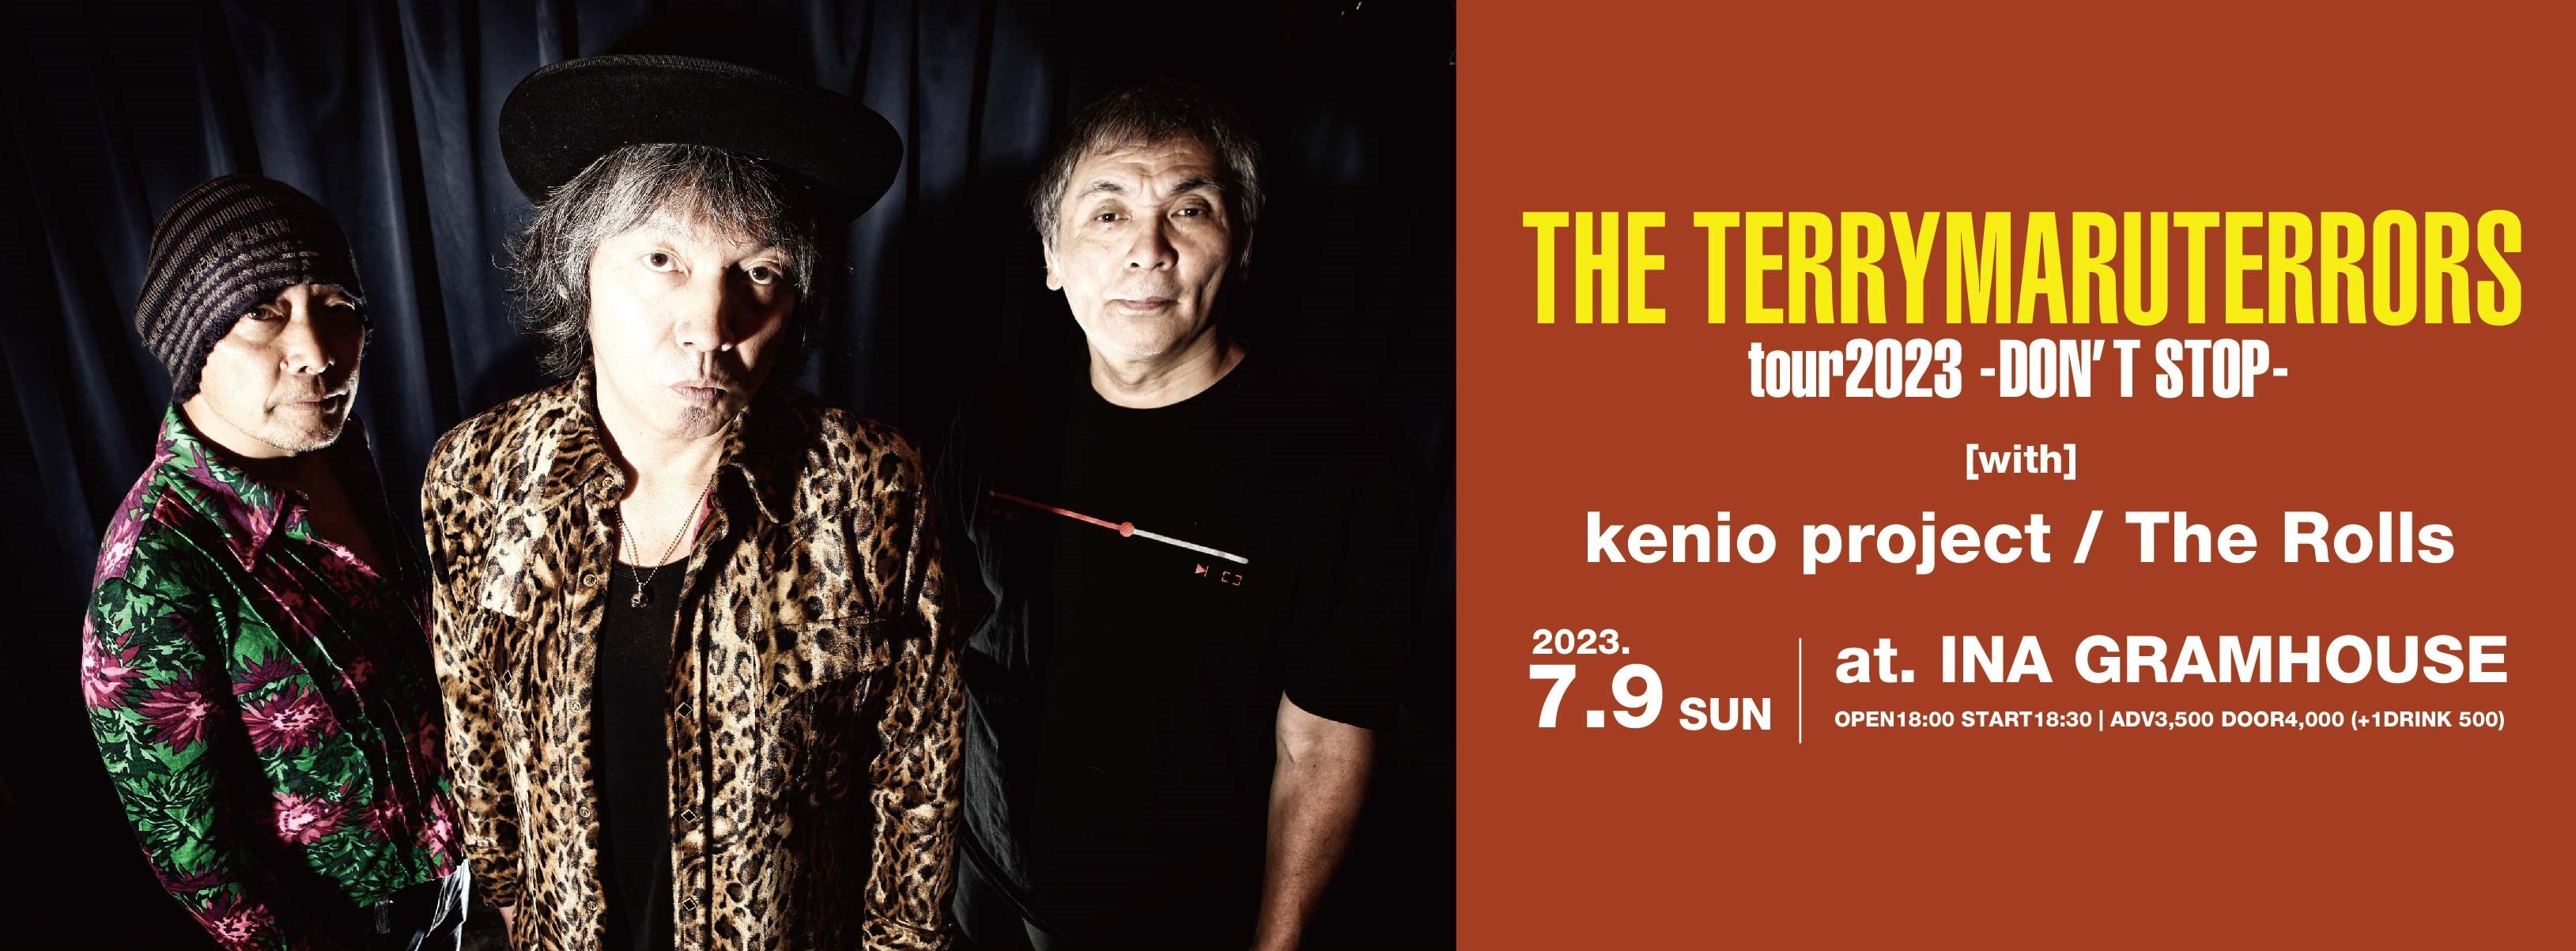 THE TERRYMARUTERRORS “TOUR 2023 -DON’T STOP-“